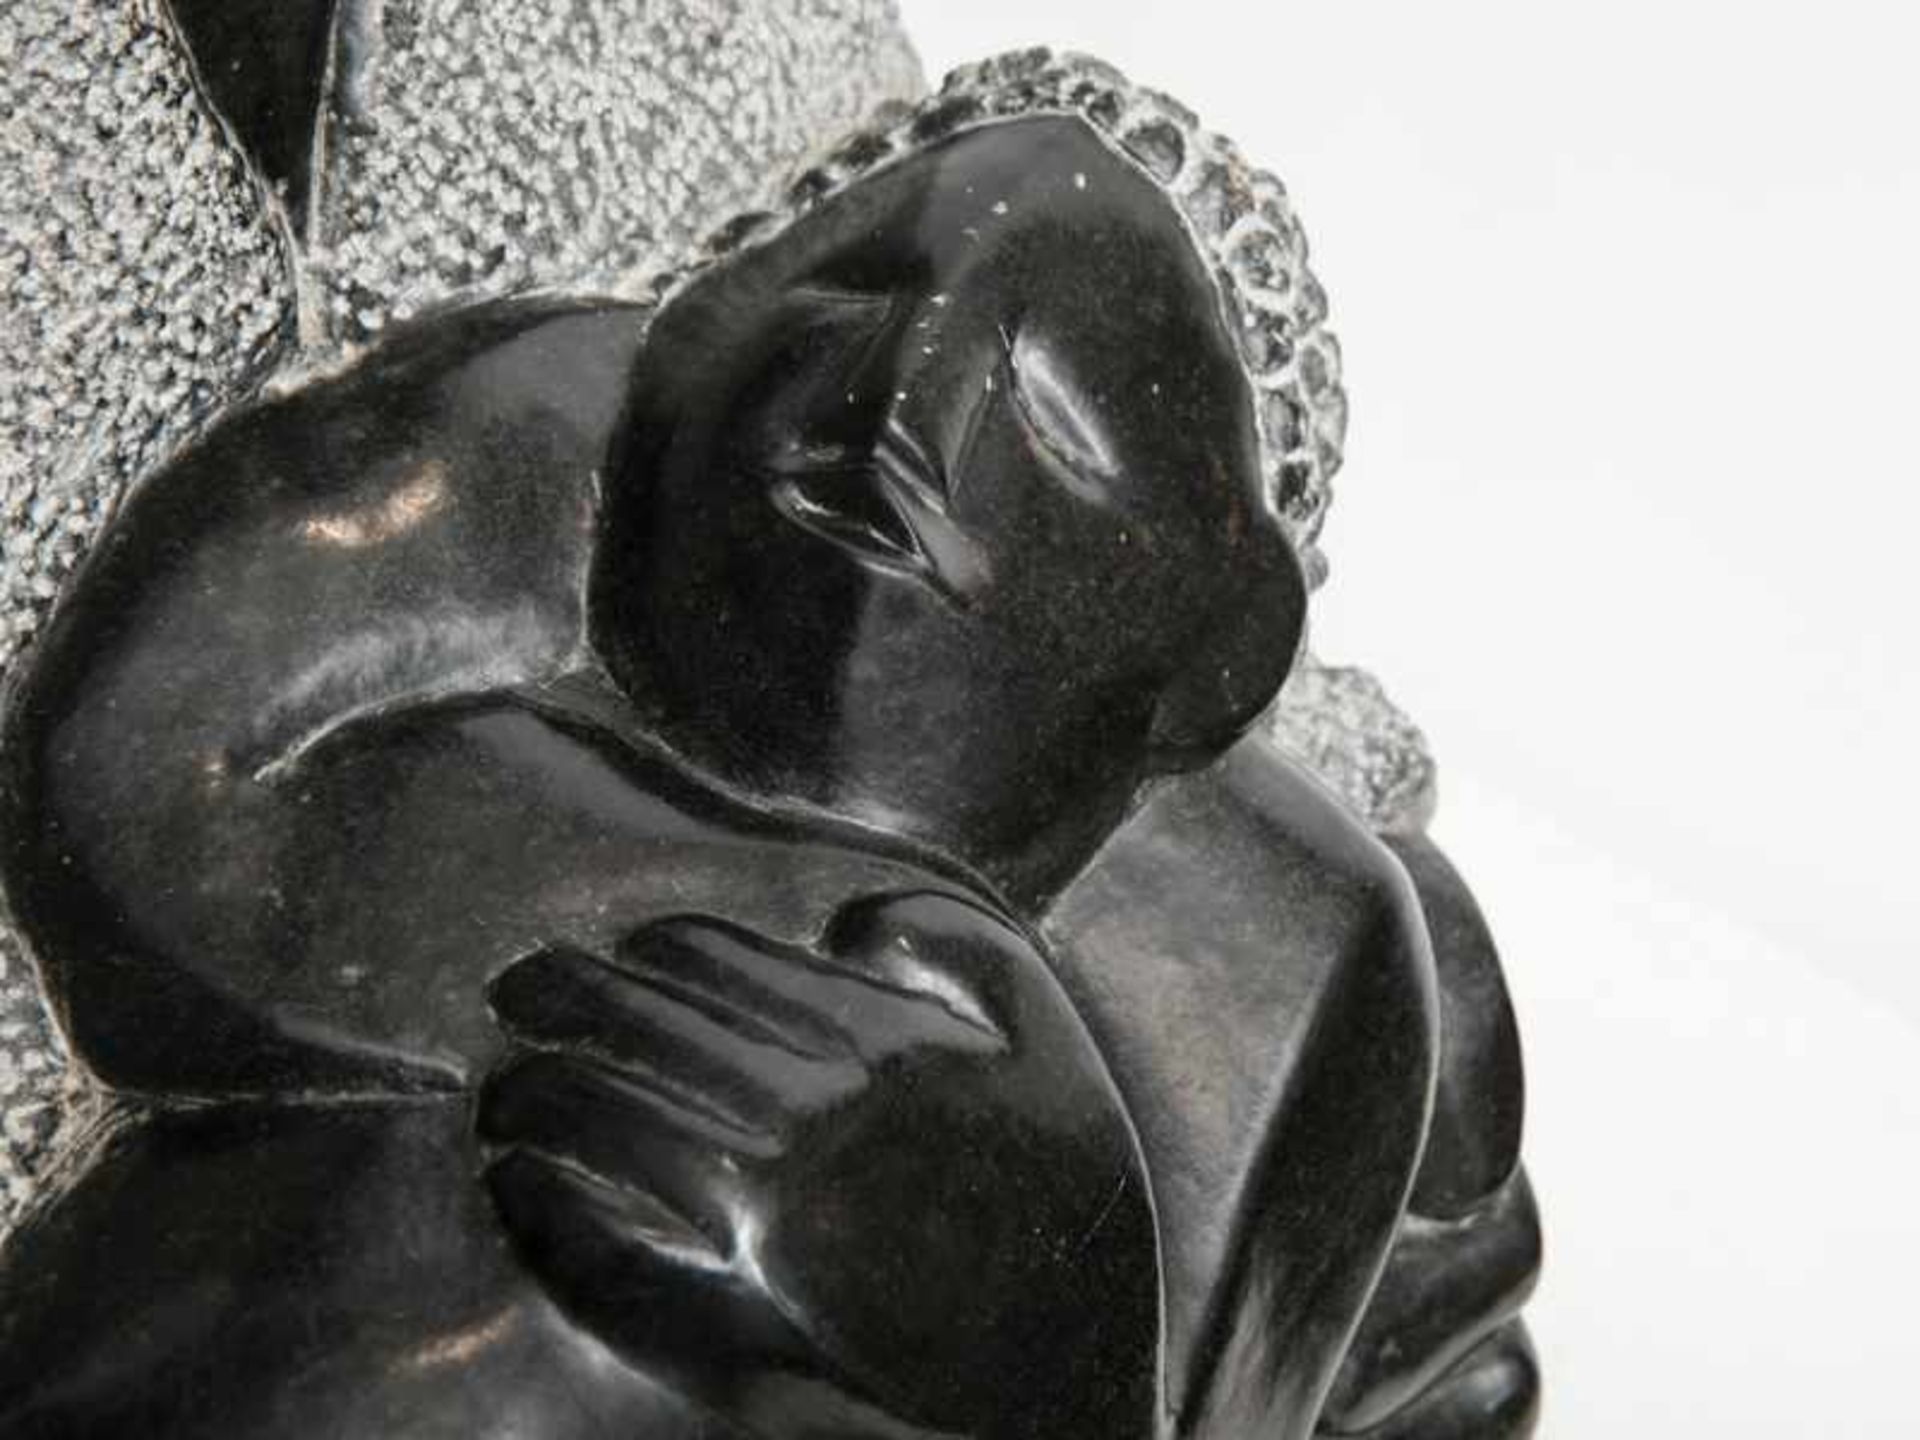 Figurenplastik "Mutter mit Kind", sog. Shona-Skulptur, Simbabwe, Afrika, 2. Hälfte 20. Jh. - Bild 3 aus 7